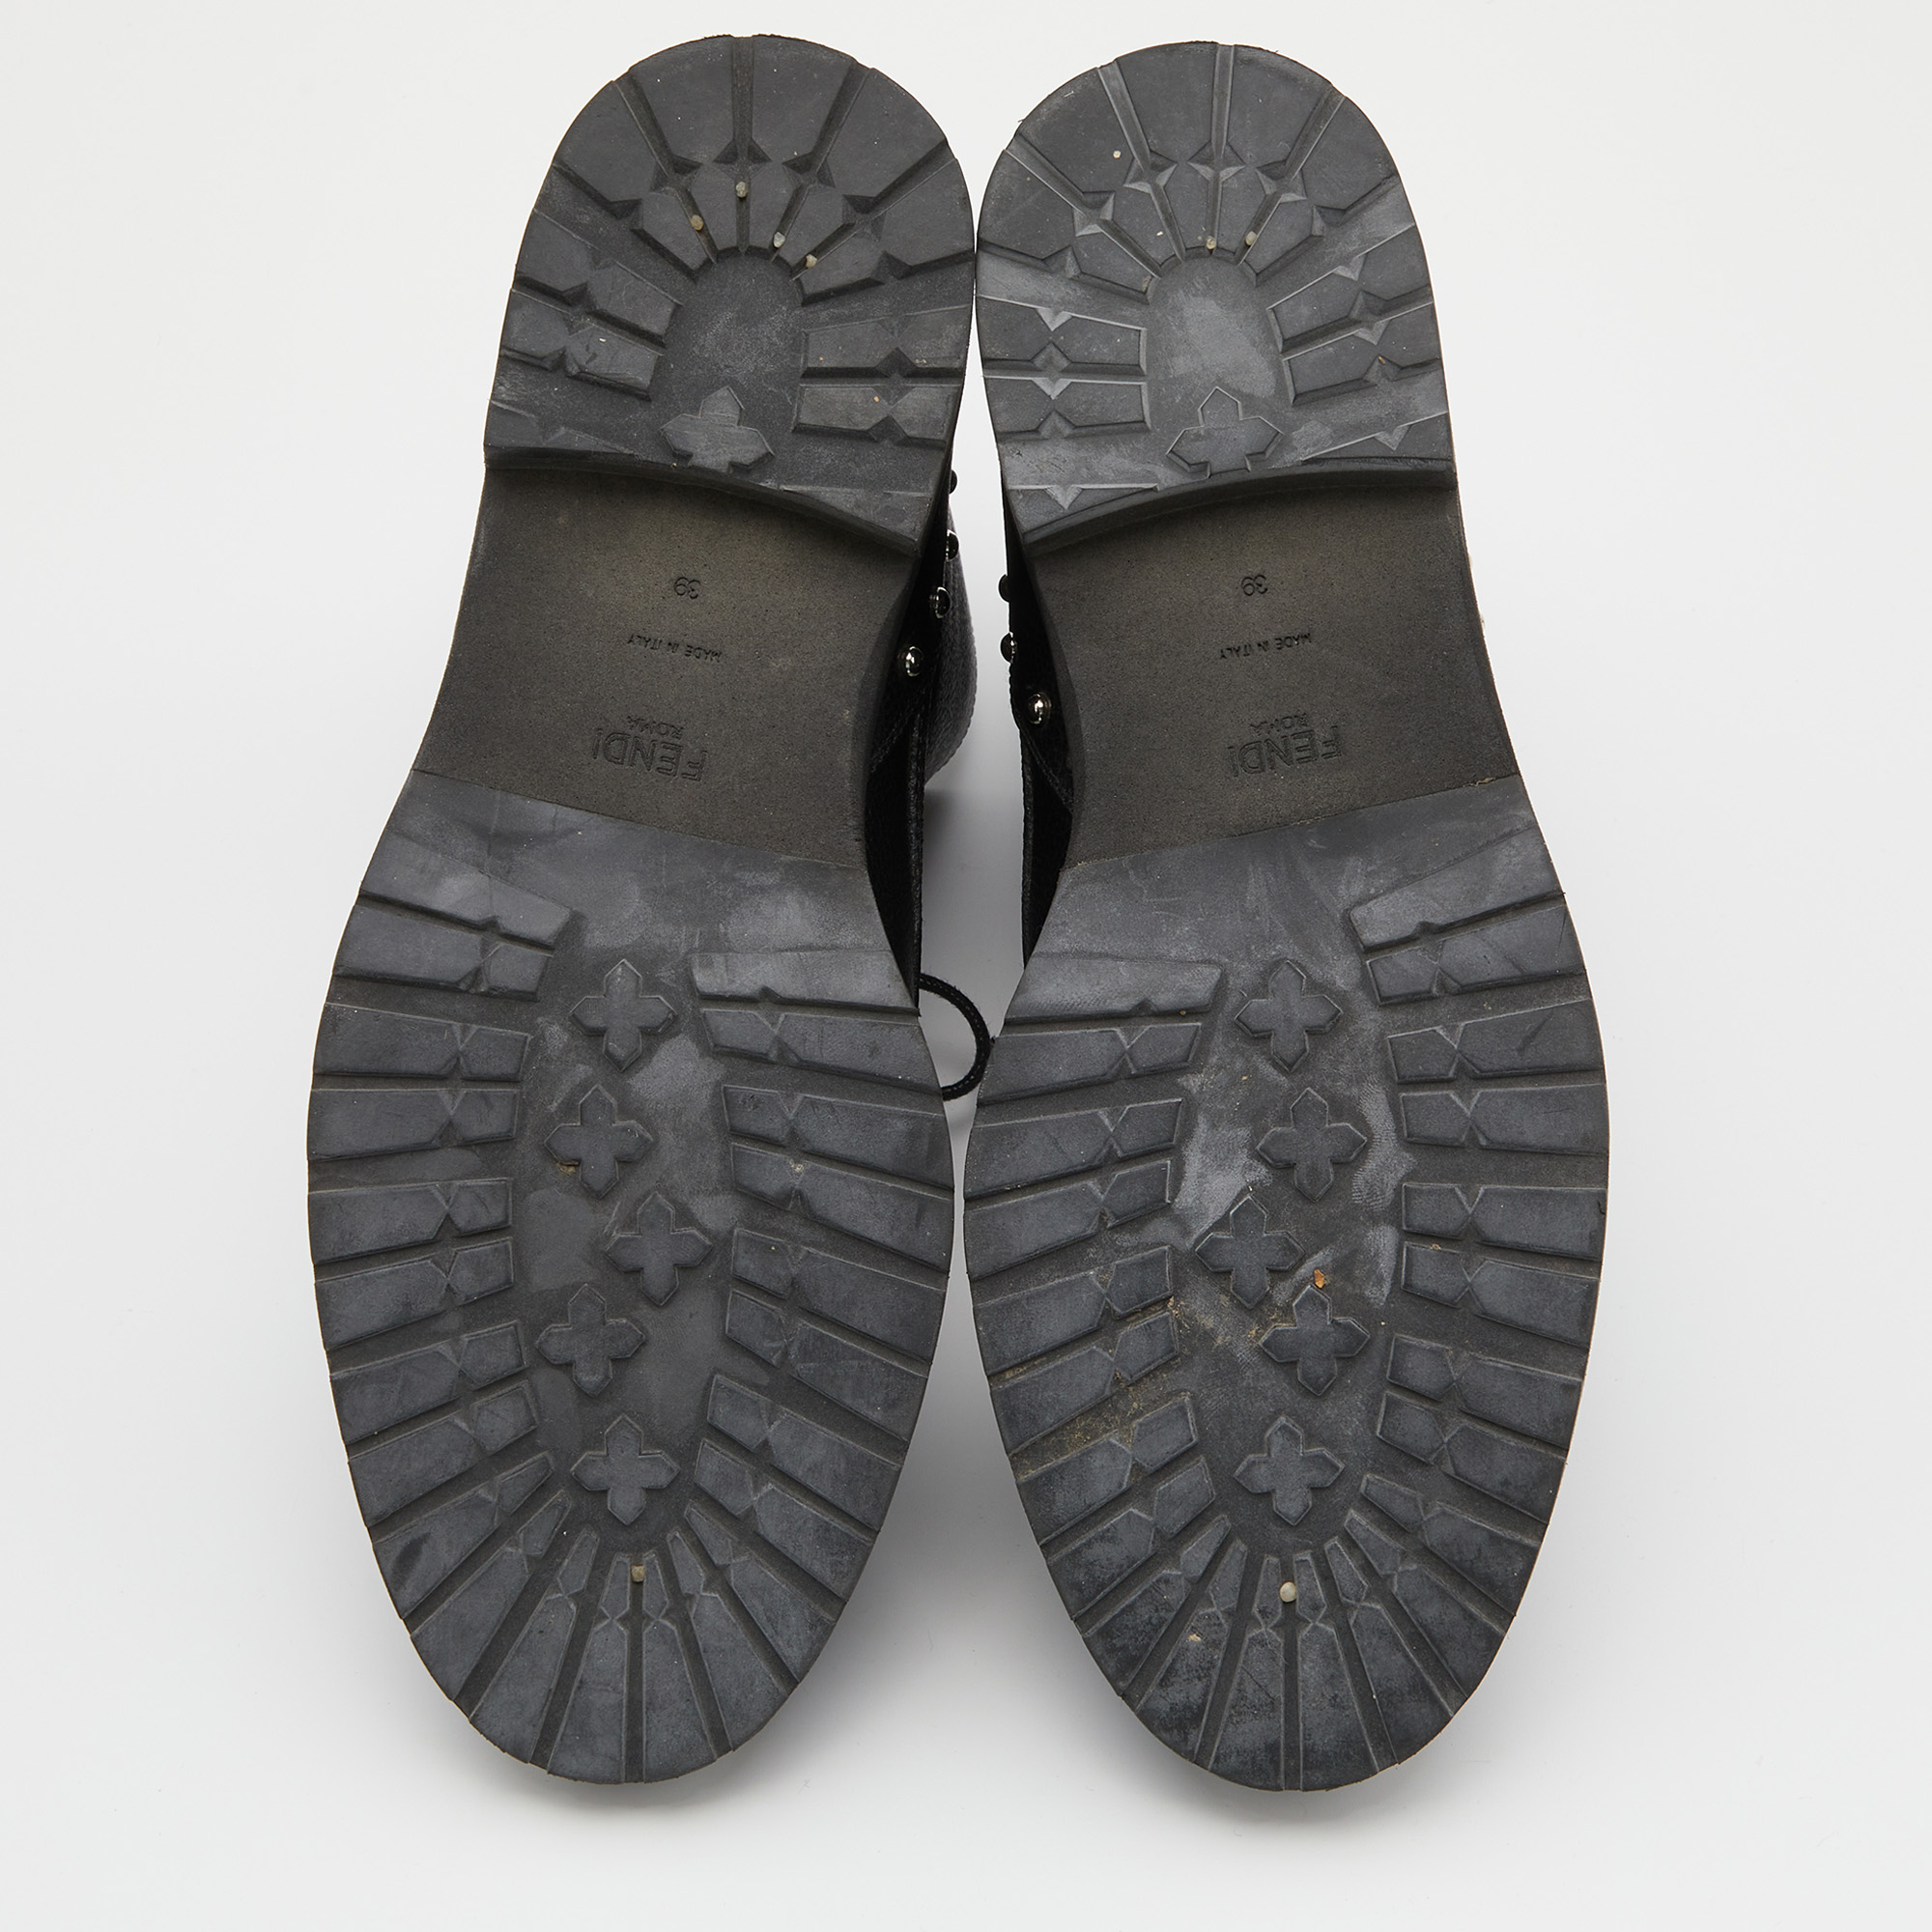 Fendi Black Leather Embellished Buckle Ankle Boots Size 39